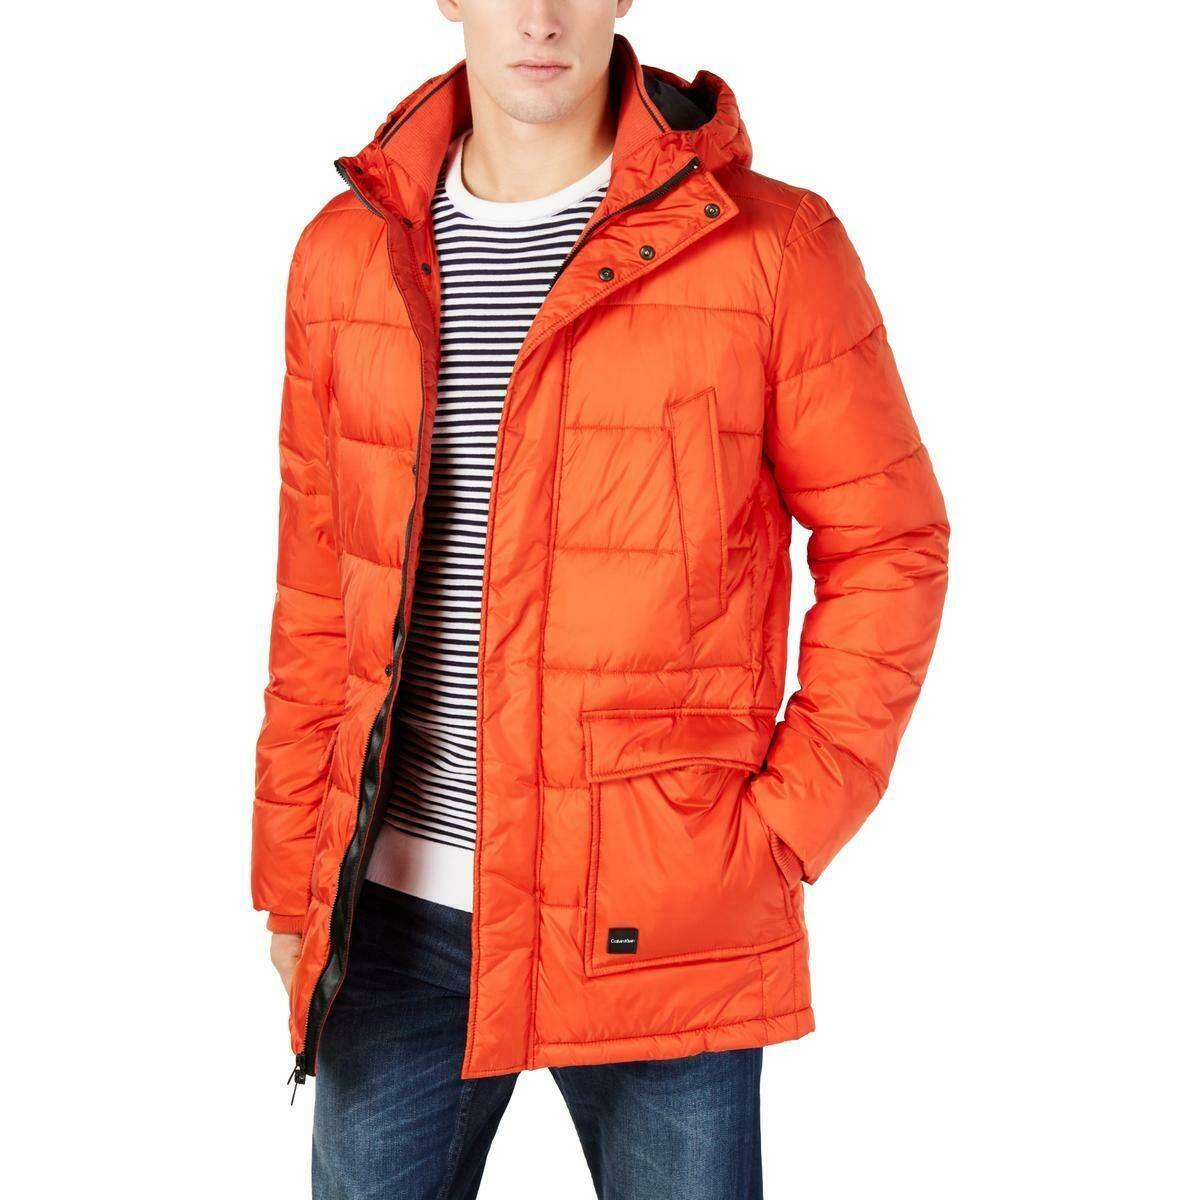 calvin klein jeans orange logo popover jacket